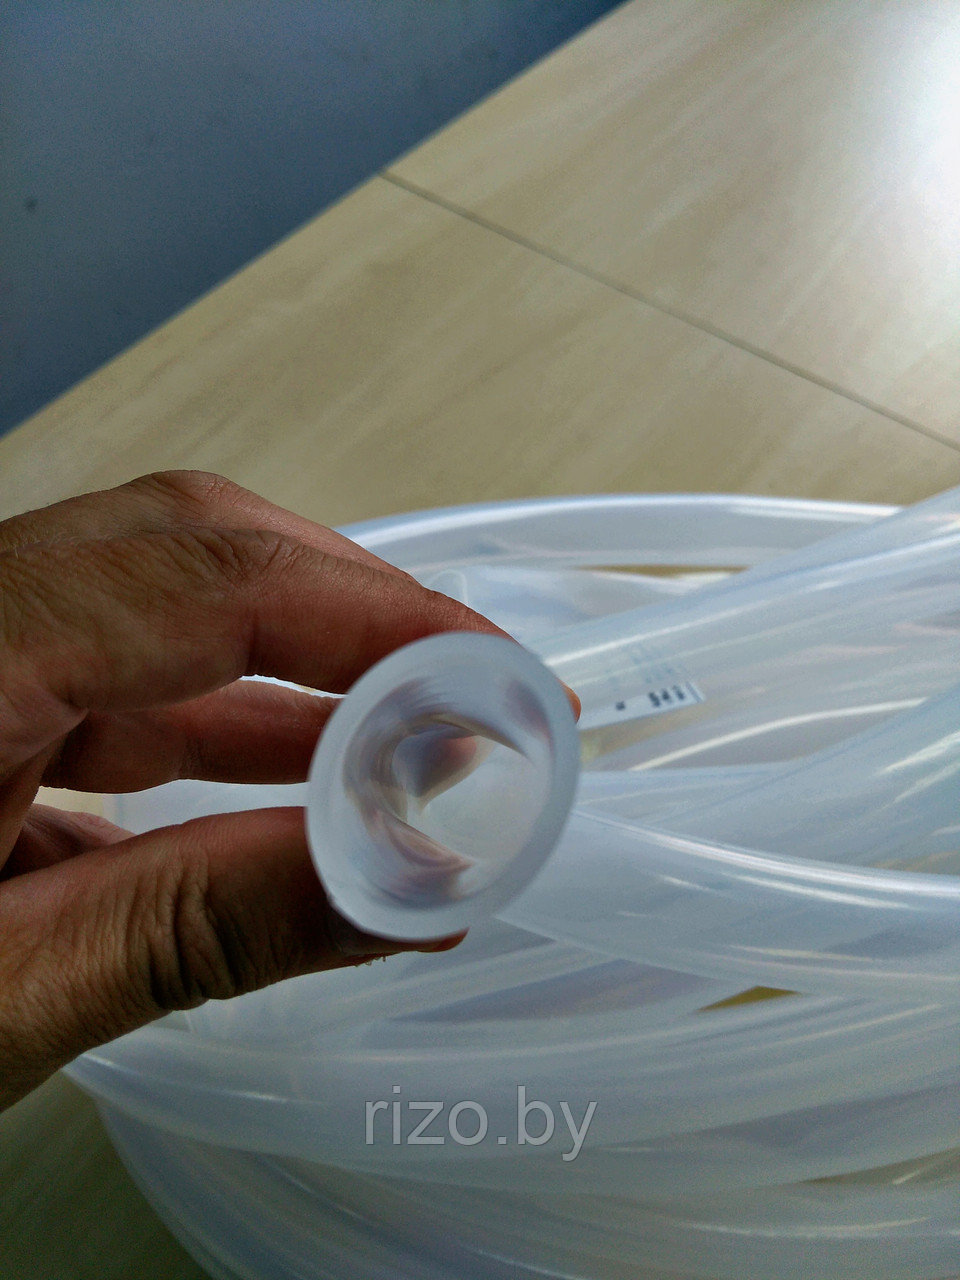 Шланг резиновый молочный 15 мм, фото 1